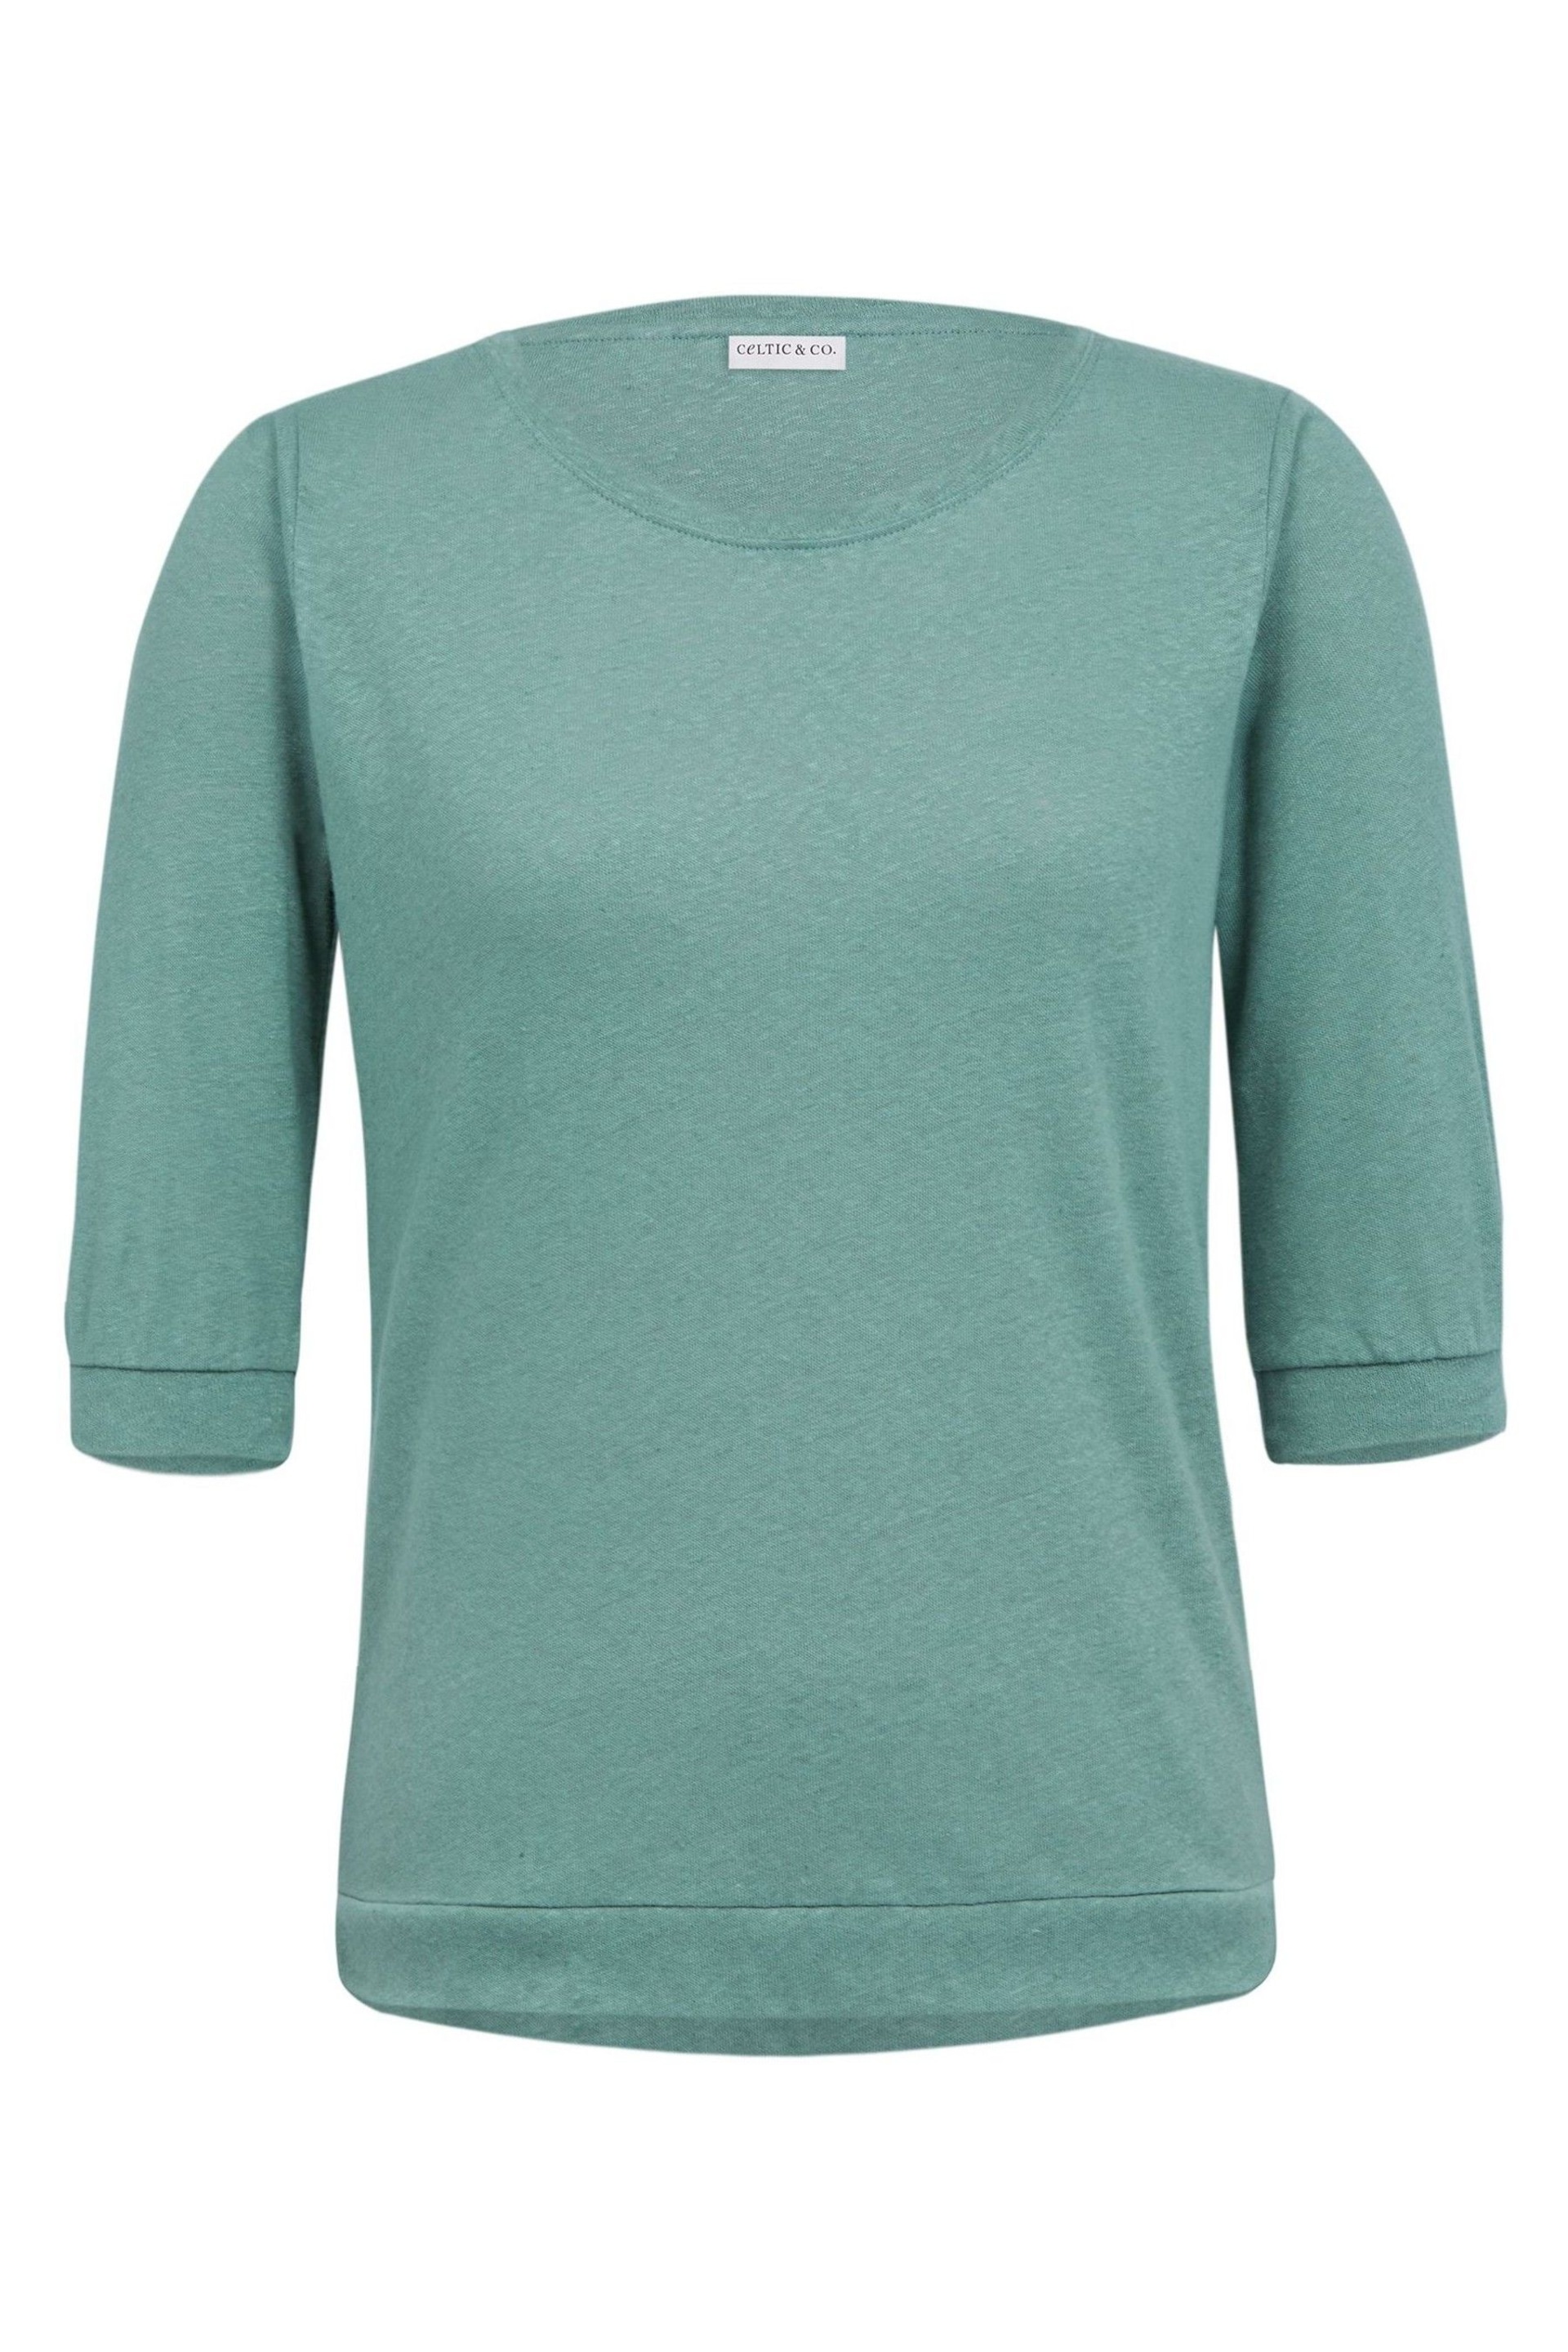 Celtic & Co. Green Linen Cotton Half Sleeve Sweatshirt - Image 4 of 7